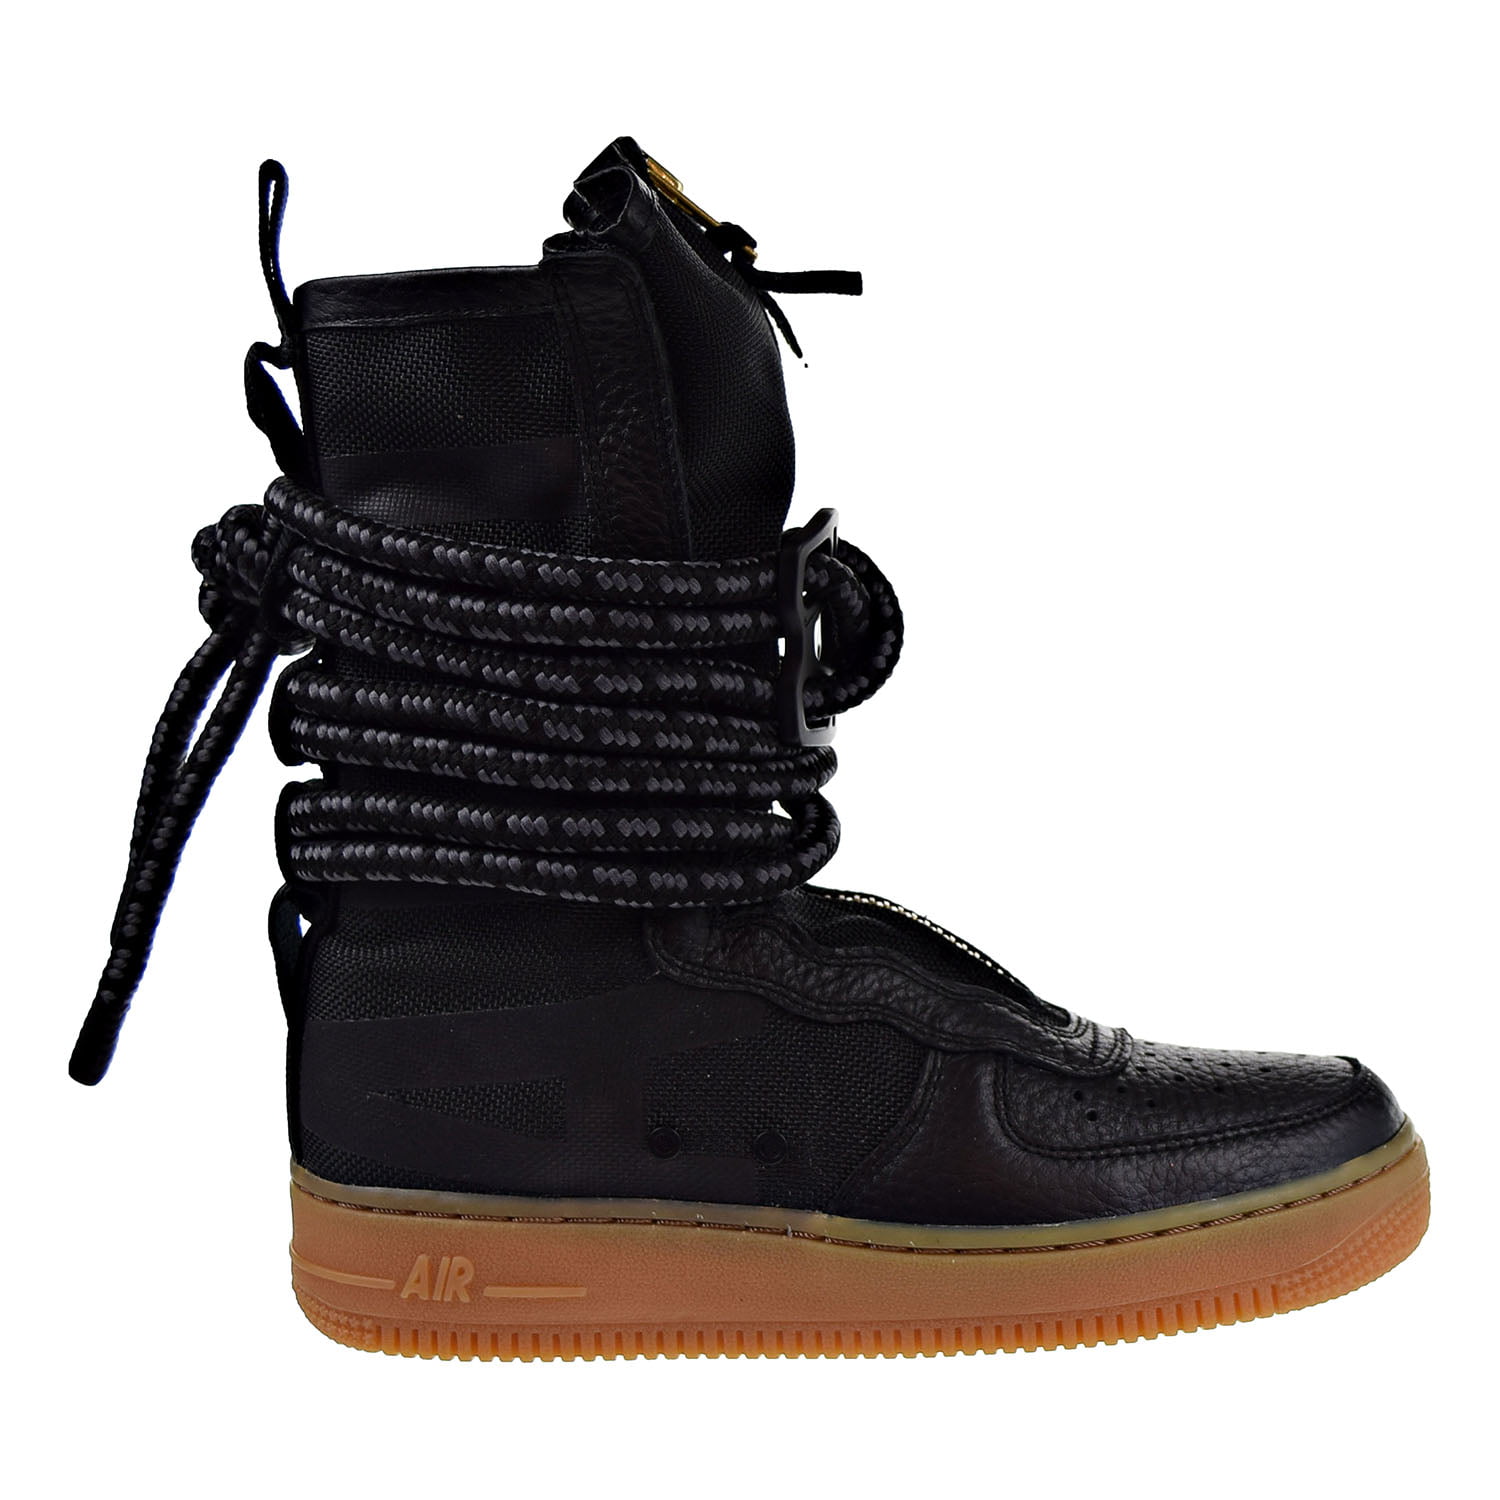 Consequent heelal postkantoor Nike SF Air Force 1 High Top Womens Boots Black/Gum Light Brown/Black  aa3965-001 - Walmart.com